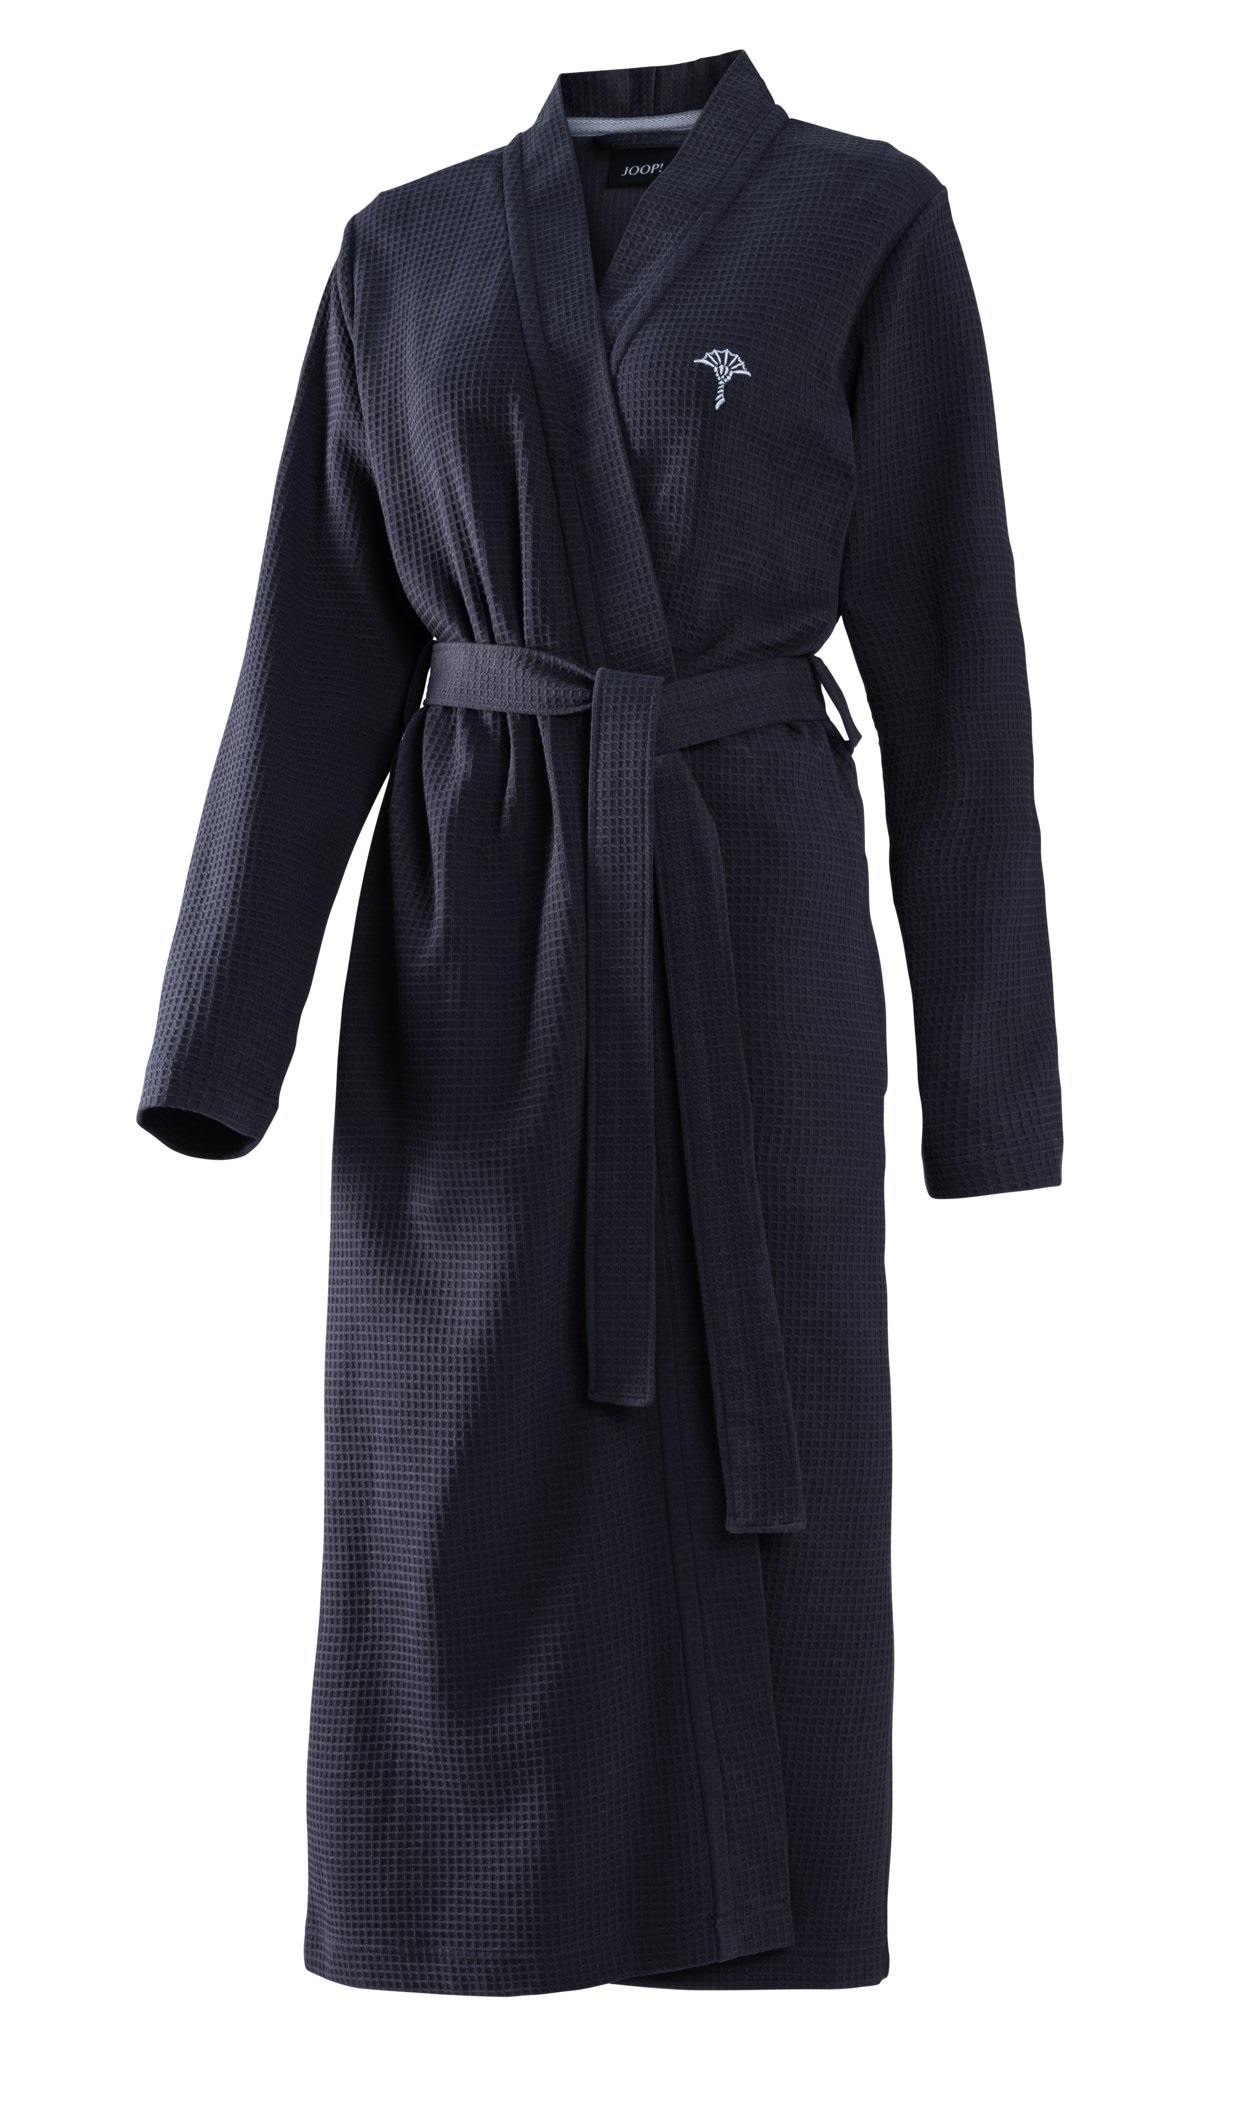 JOOP! Damen Kimono Piqué 1657-175 Blau L 44/46 Baumwolle leichter Morgenmantel